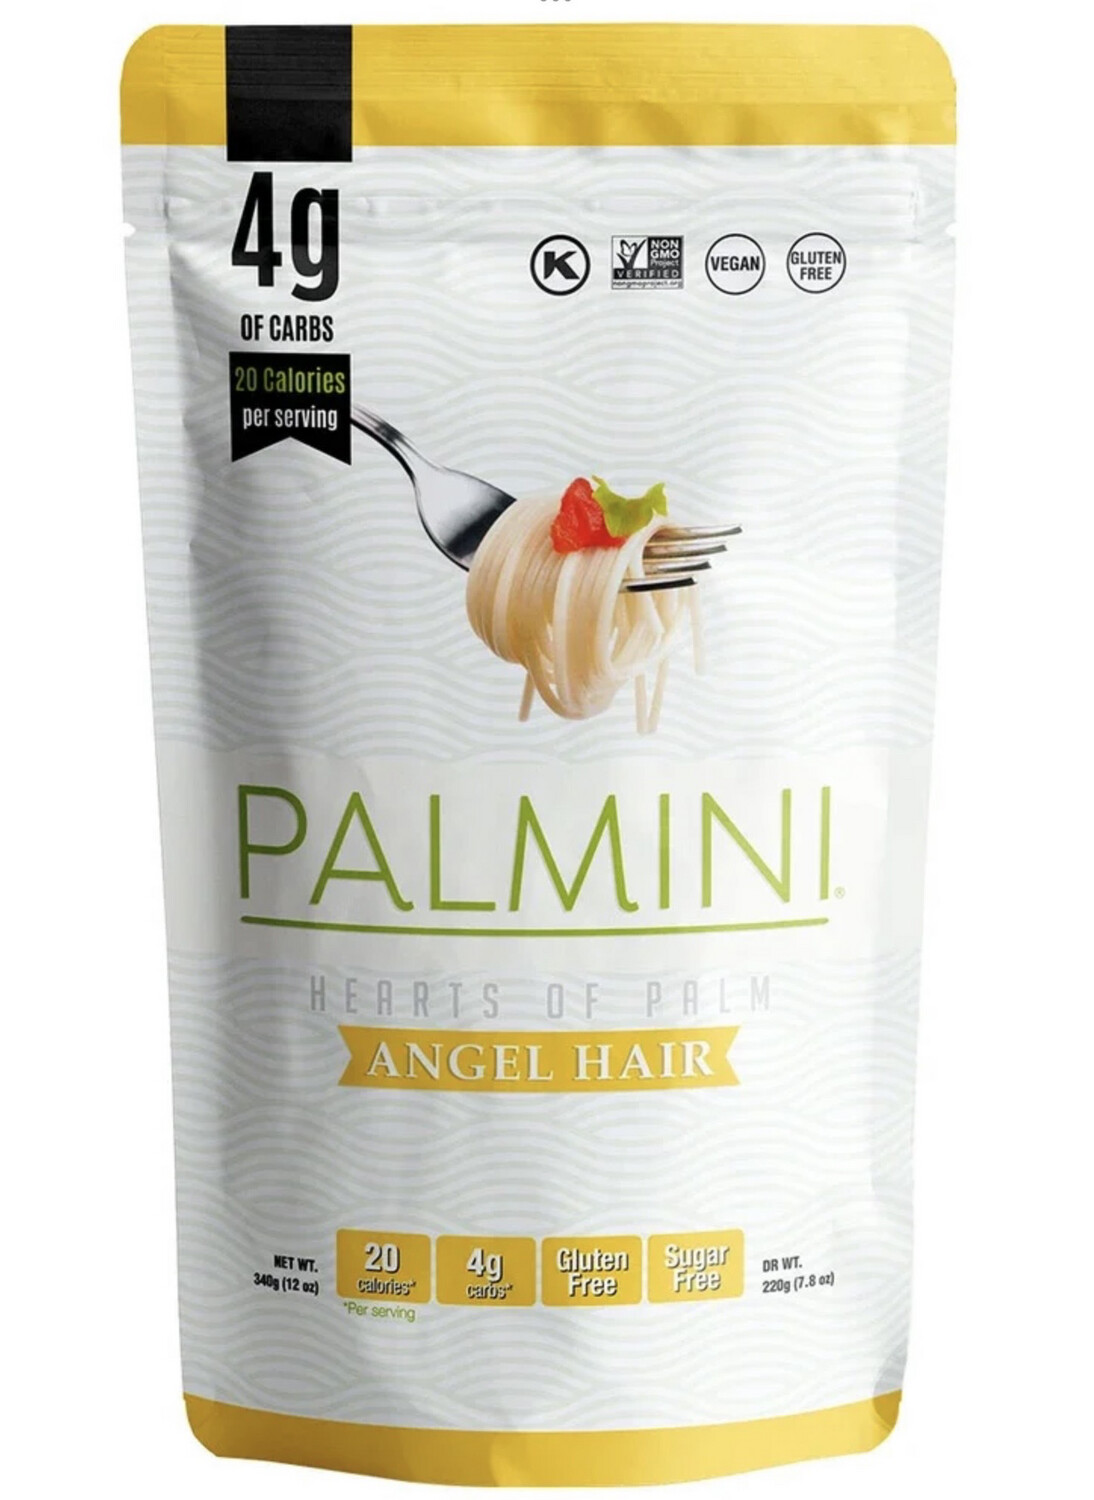 Palmini Hearts of Palm Angel Hair 12 oz 